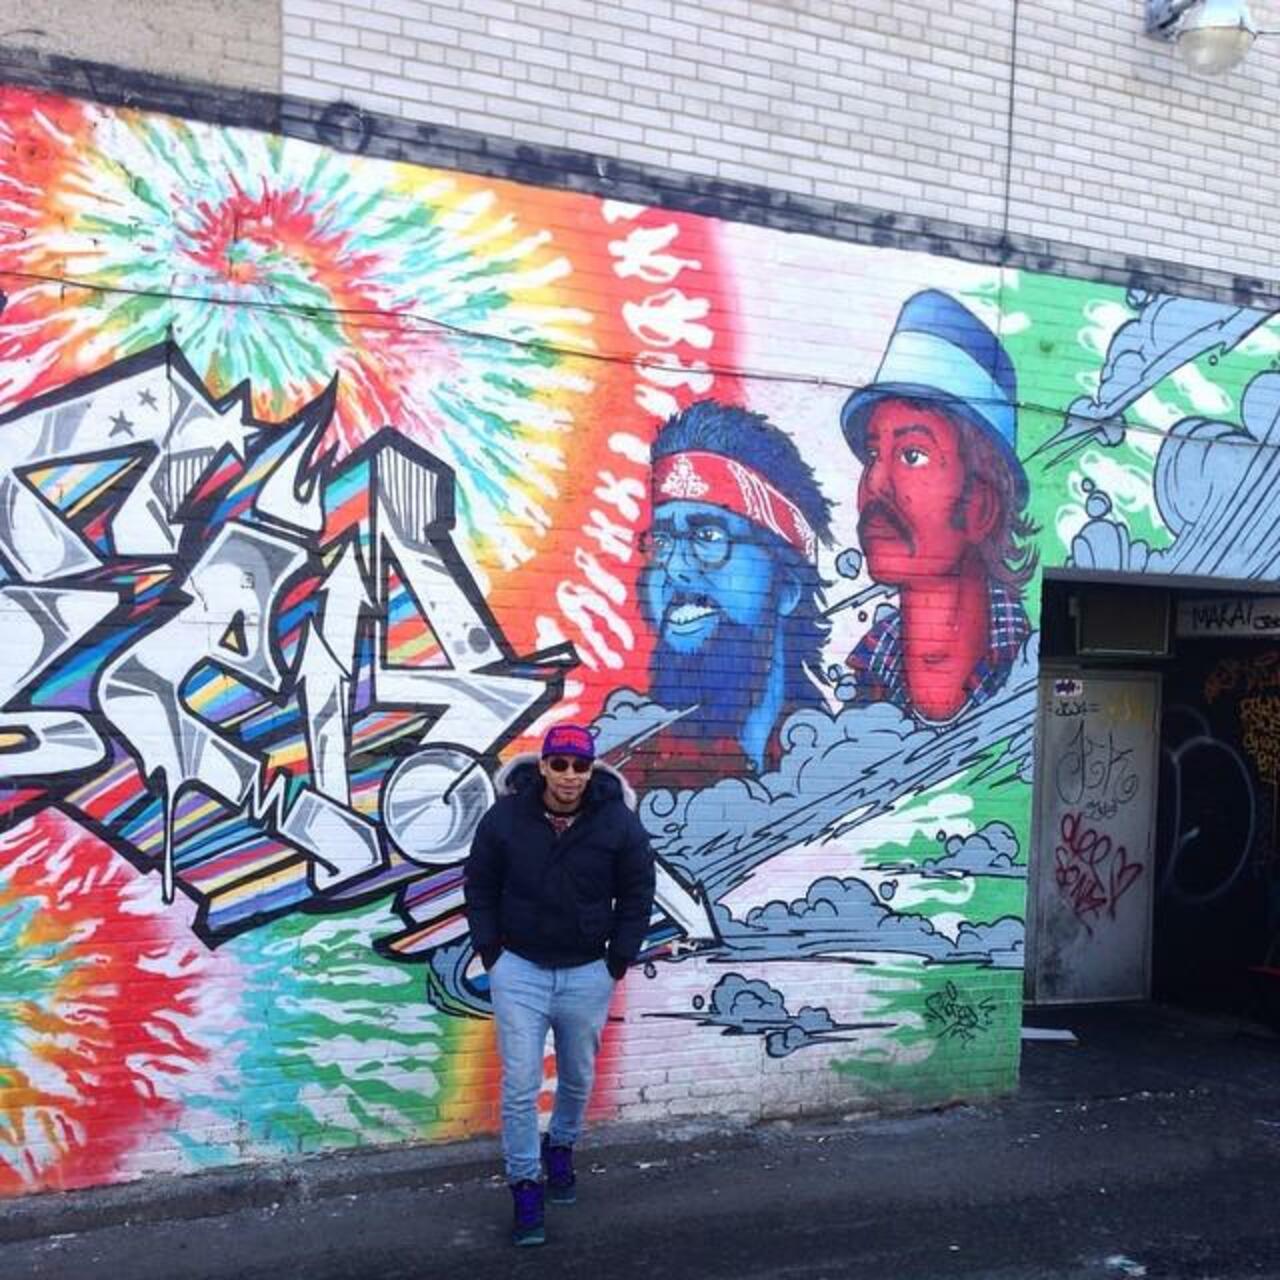 Breezy Toronteezy #toronto #graffiti #art #mural #wallart #thekorihall #spraypaint #canadagoose #zanerobe http://t.co/ljvXrZ0F8I